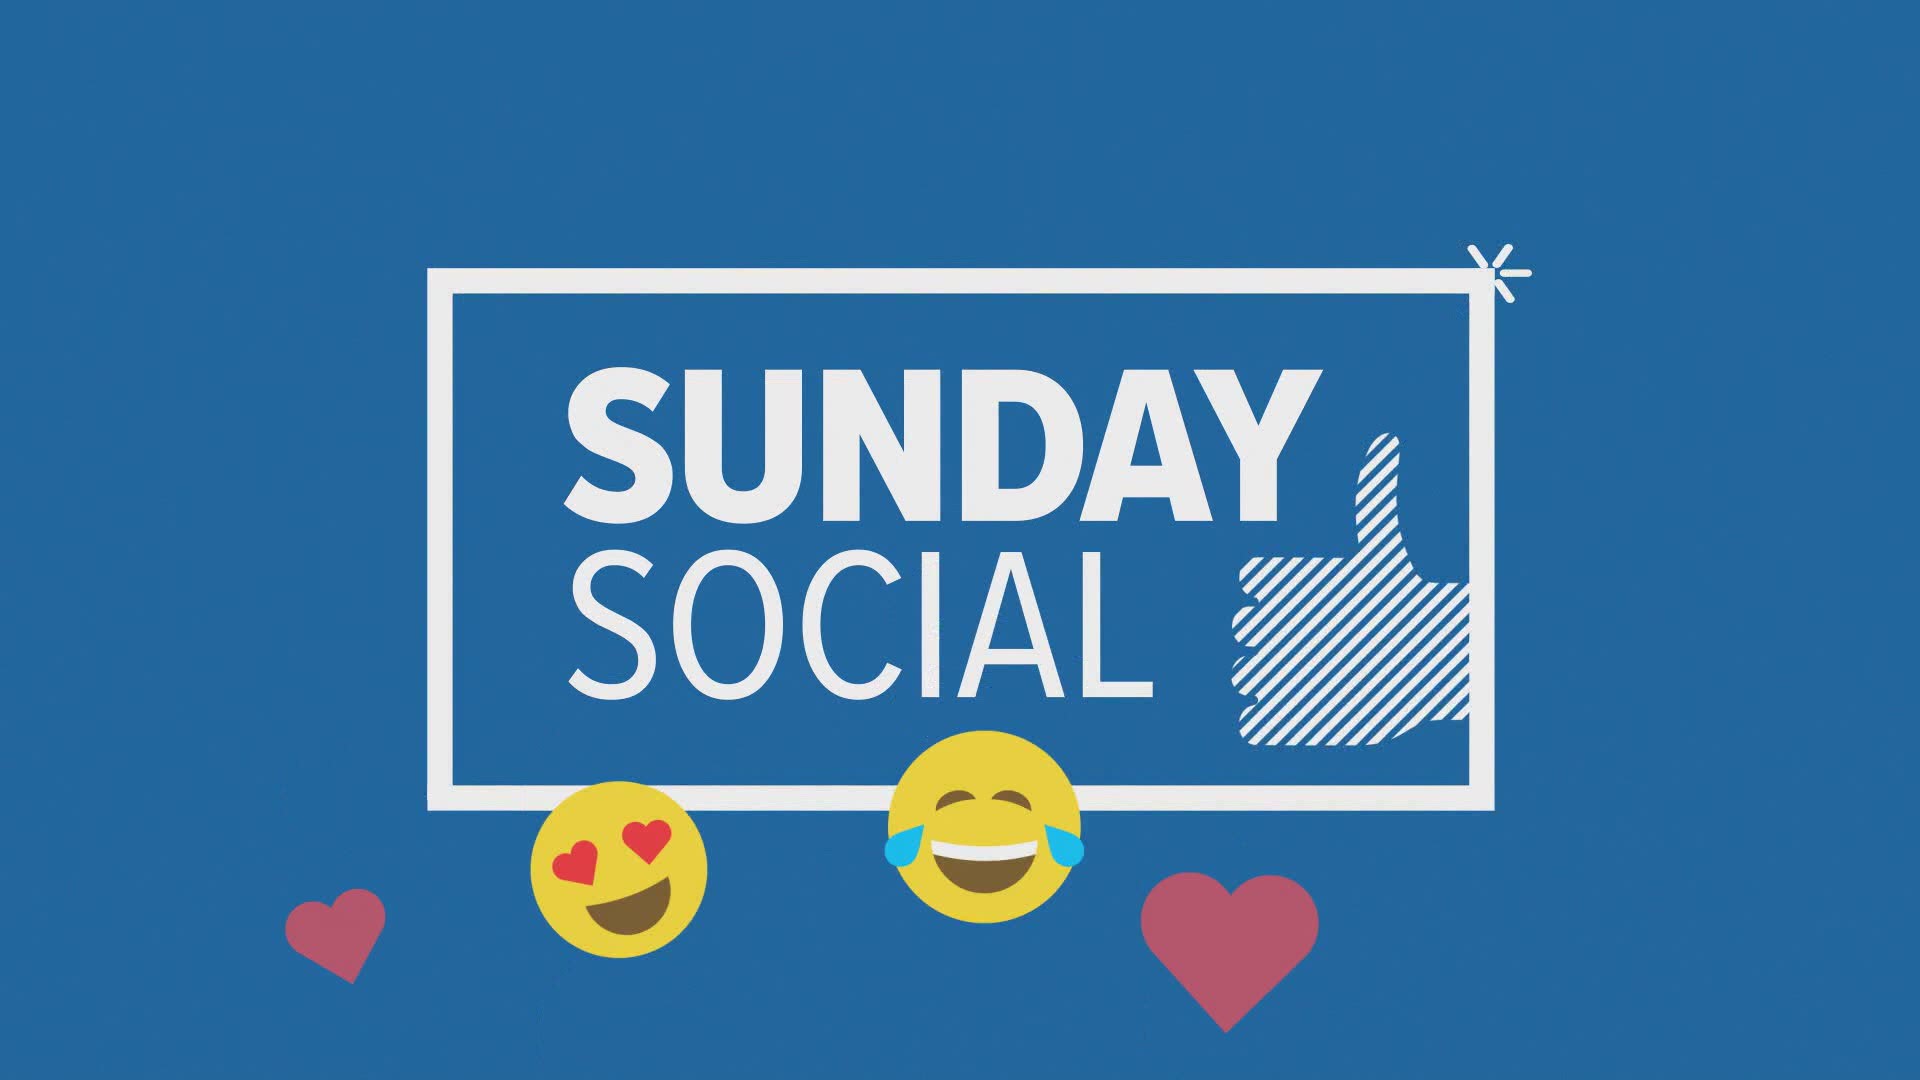 Samantha York and Ryan Breton share their favorite social media posts of the week.